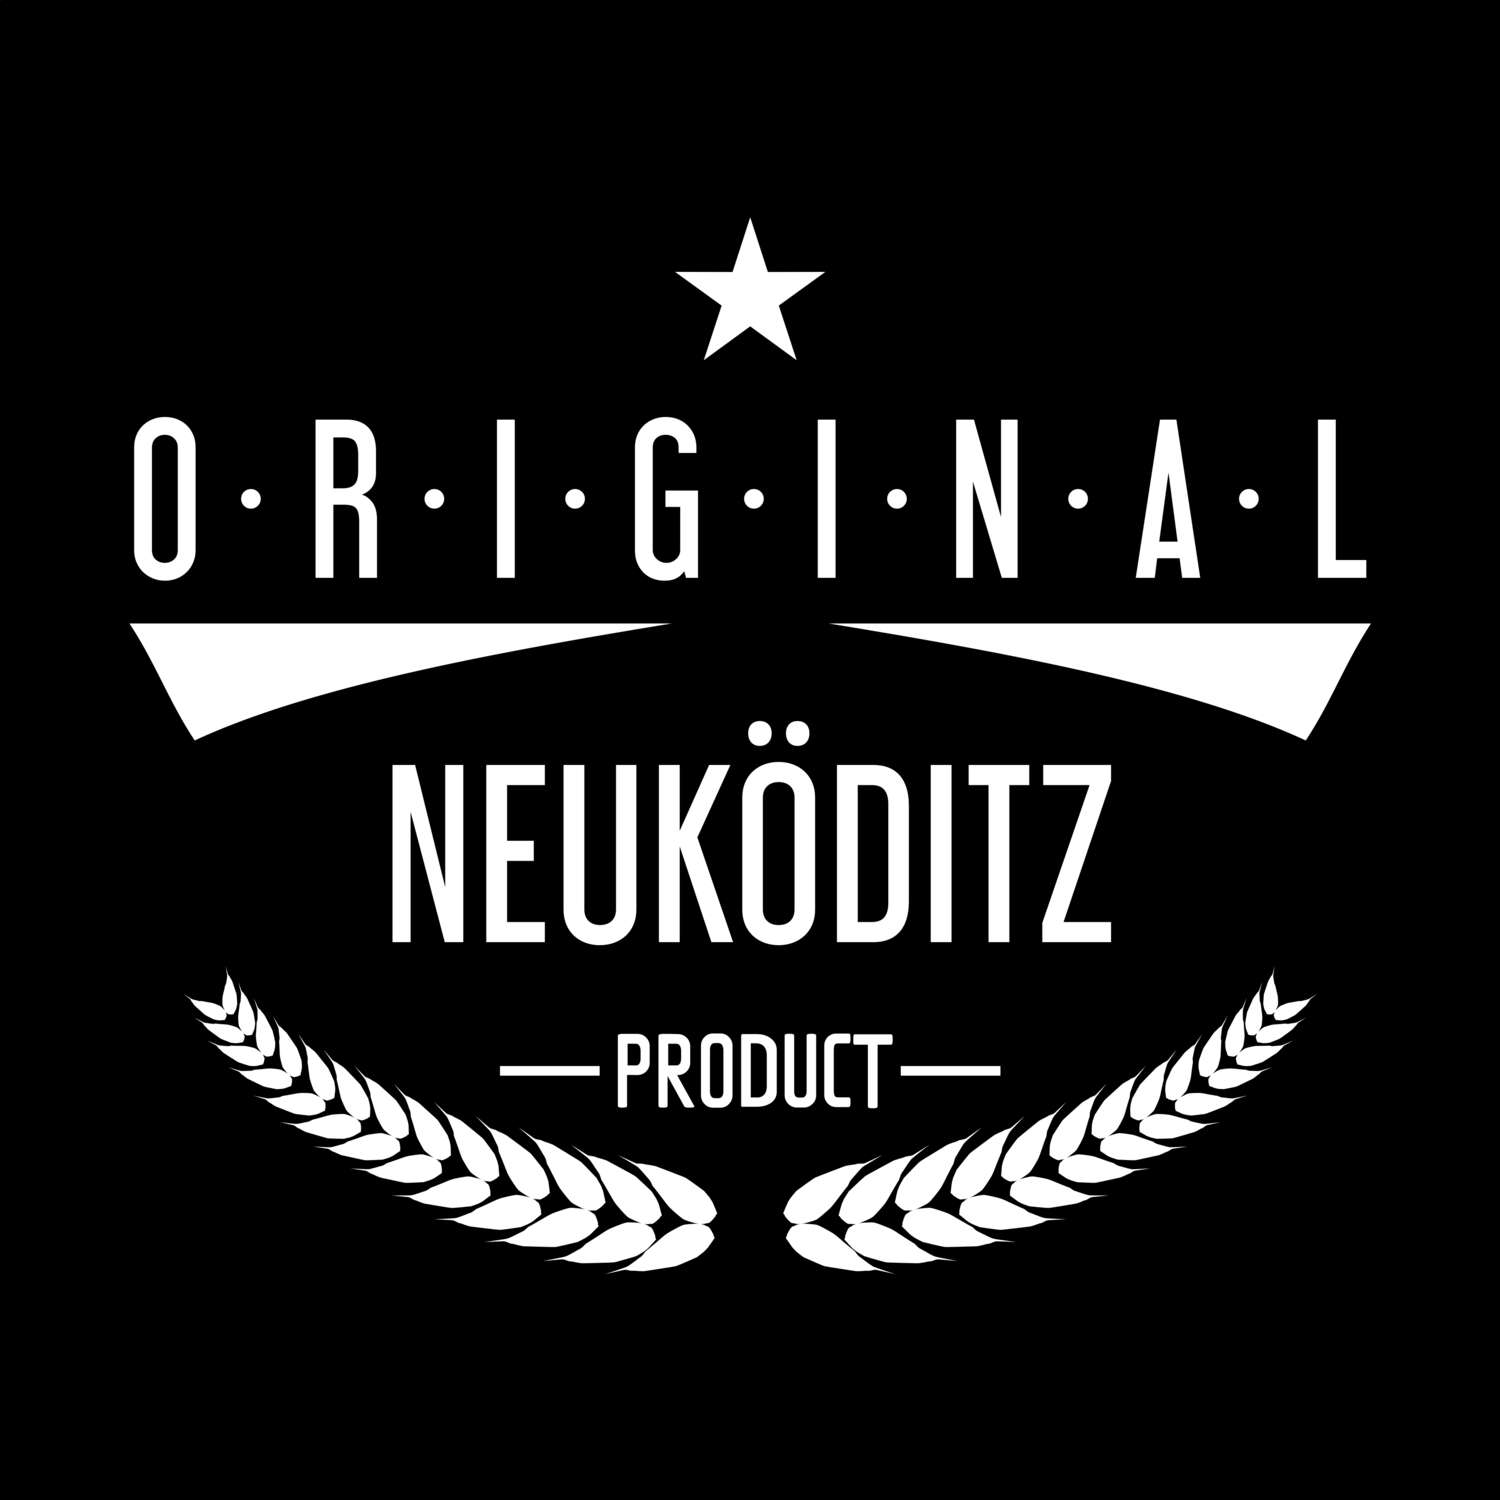 Neuköditz T-Shirt »Original Product«